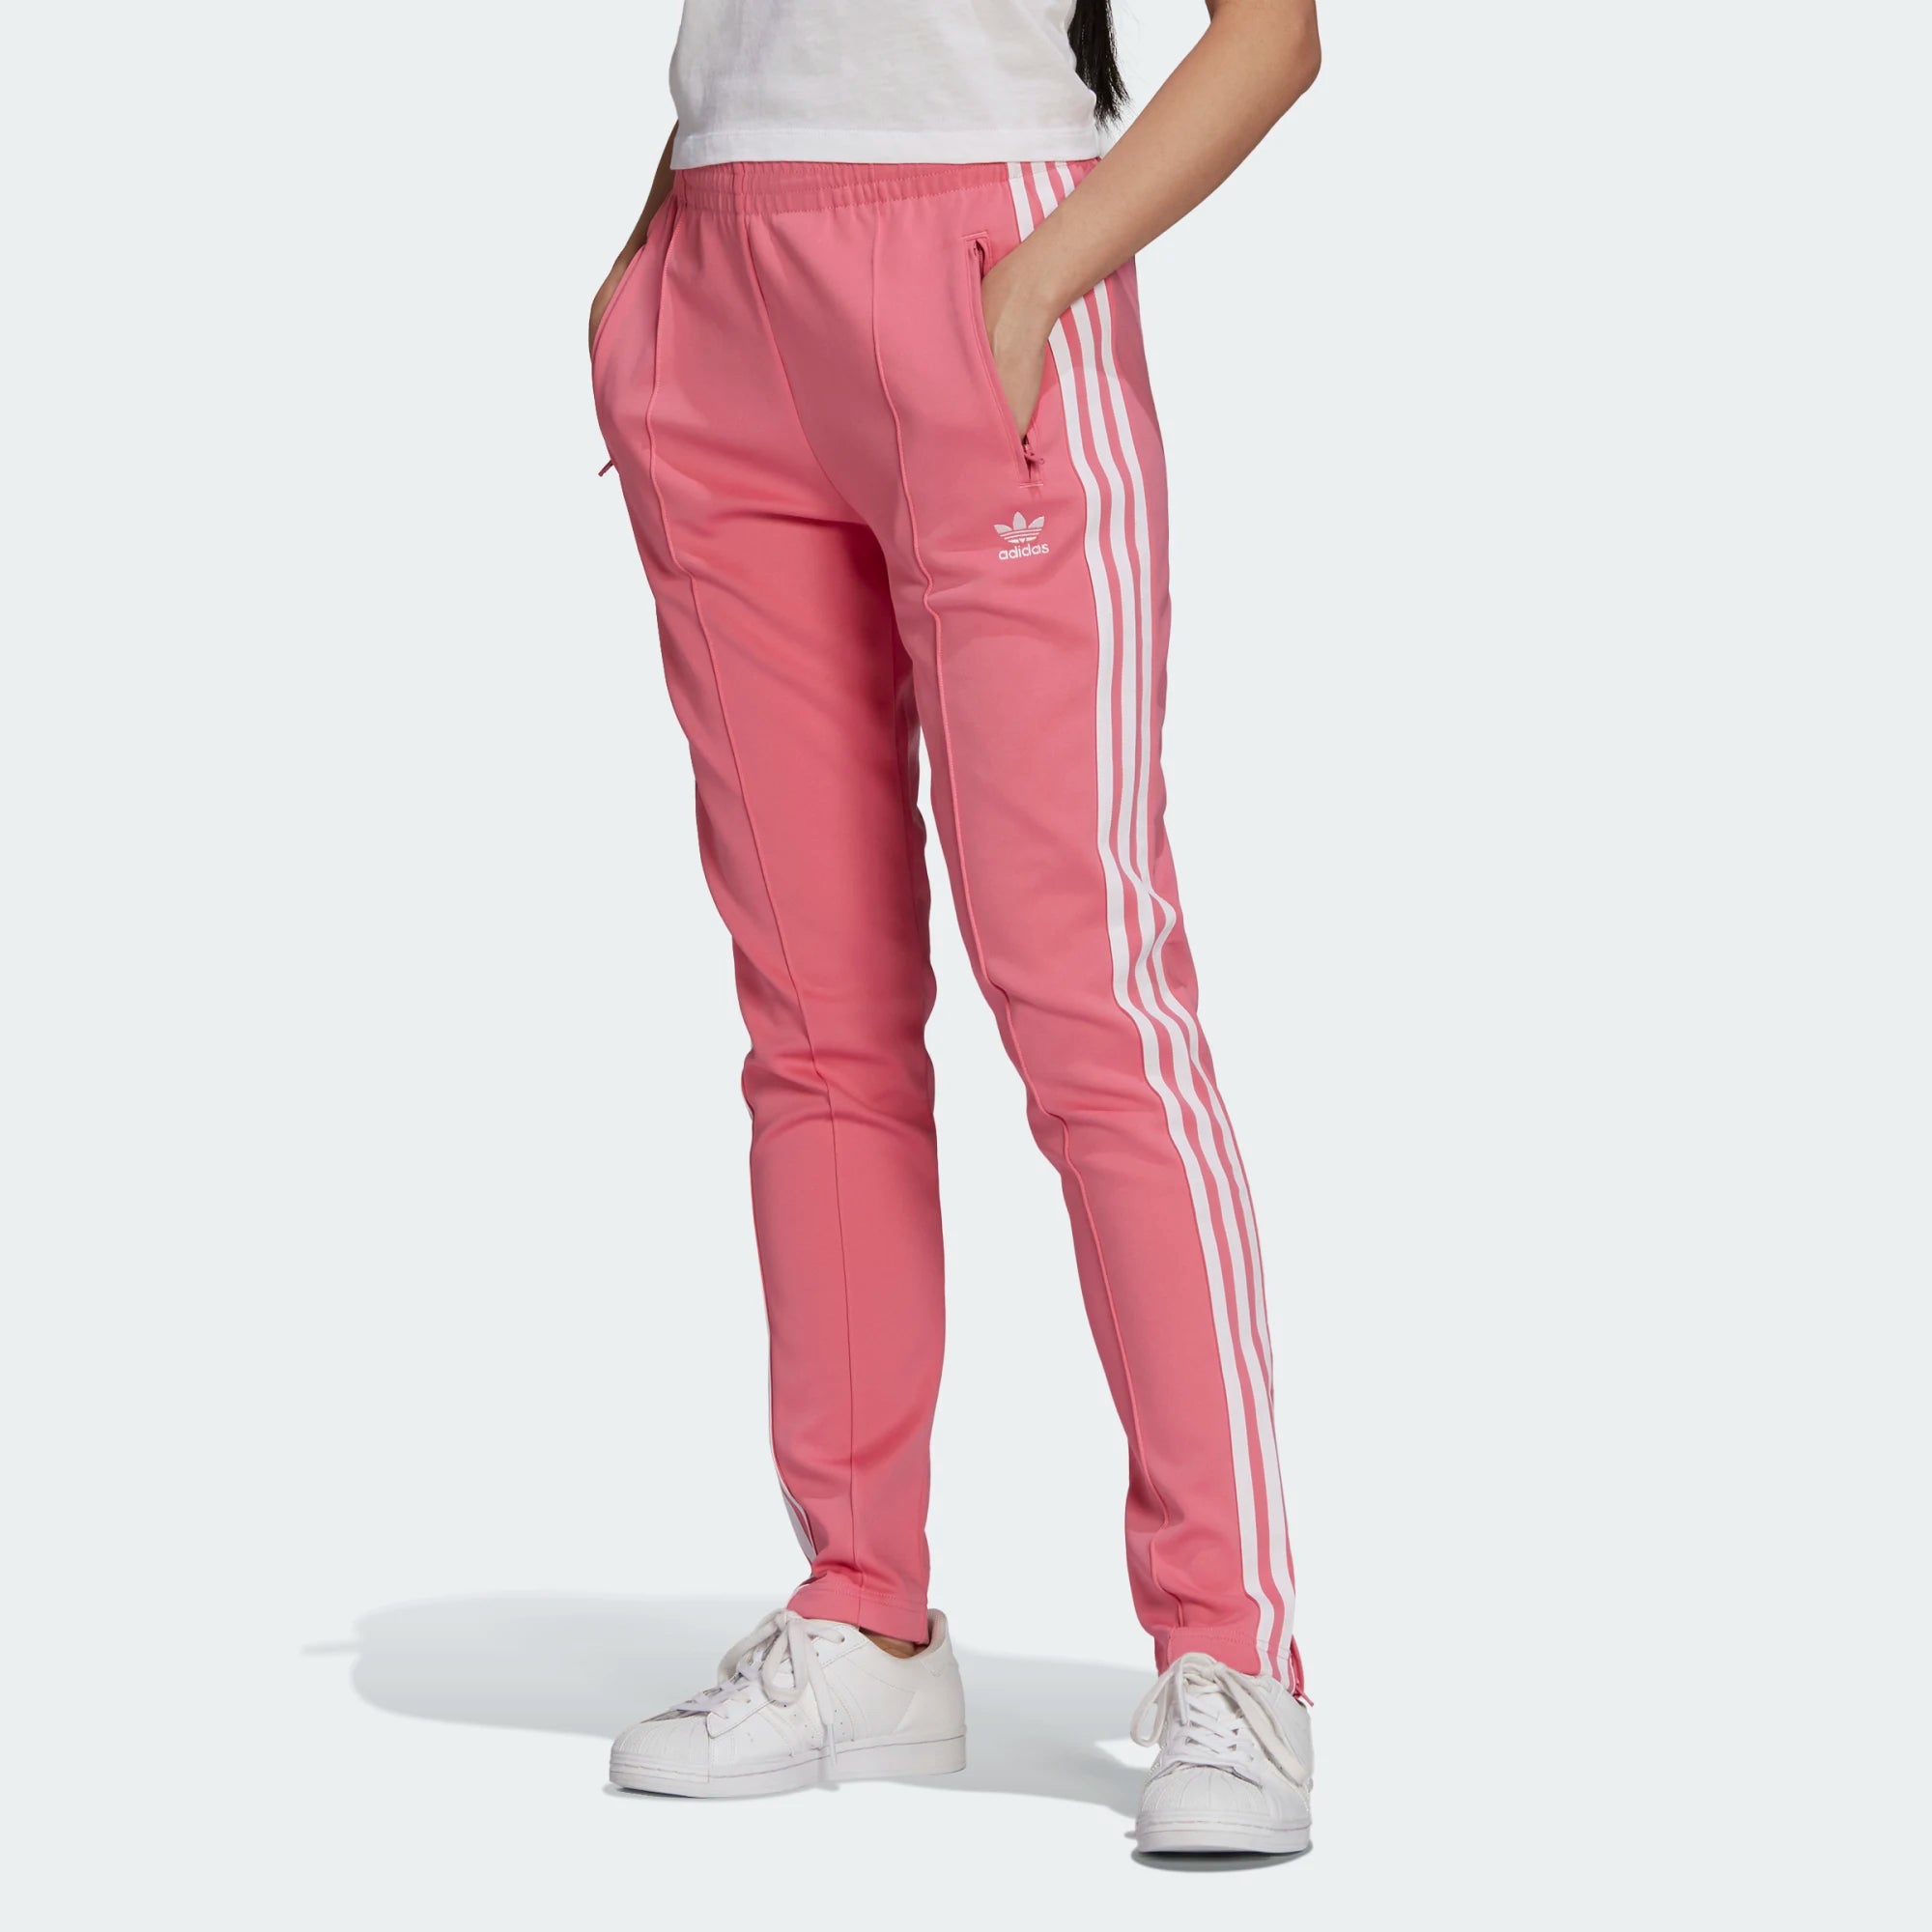 adidas Originals Womens Adilenium Oversized Pants Red | eBay